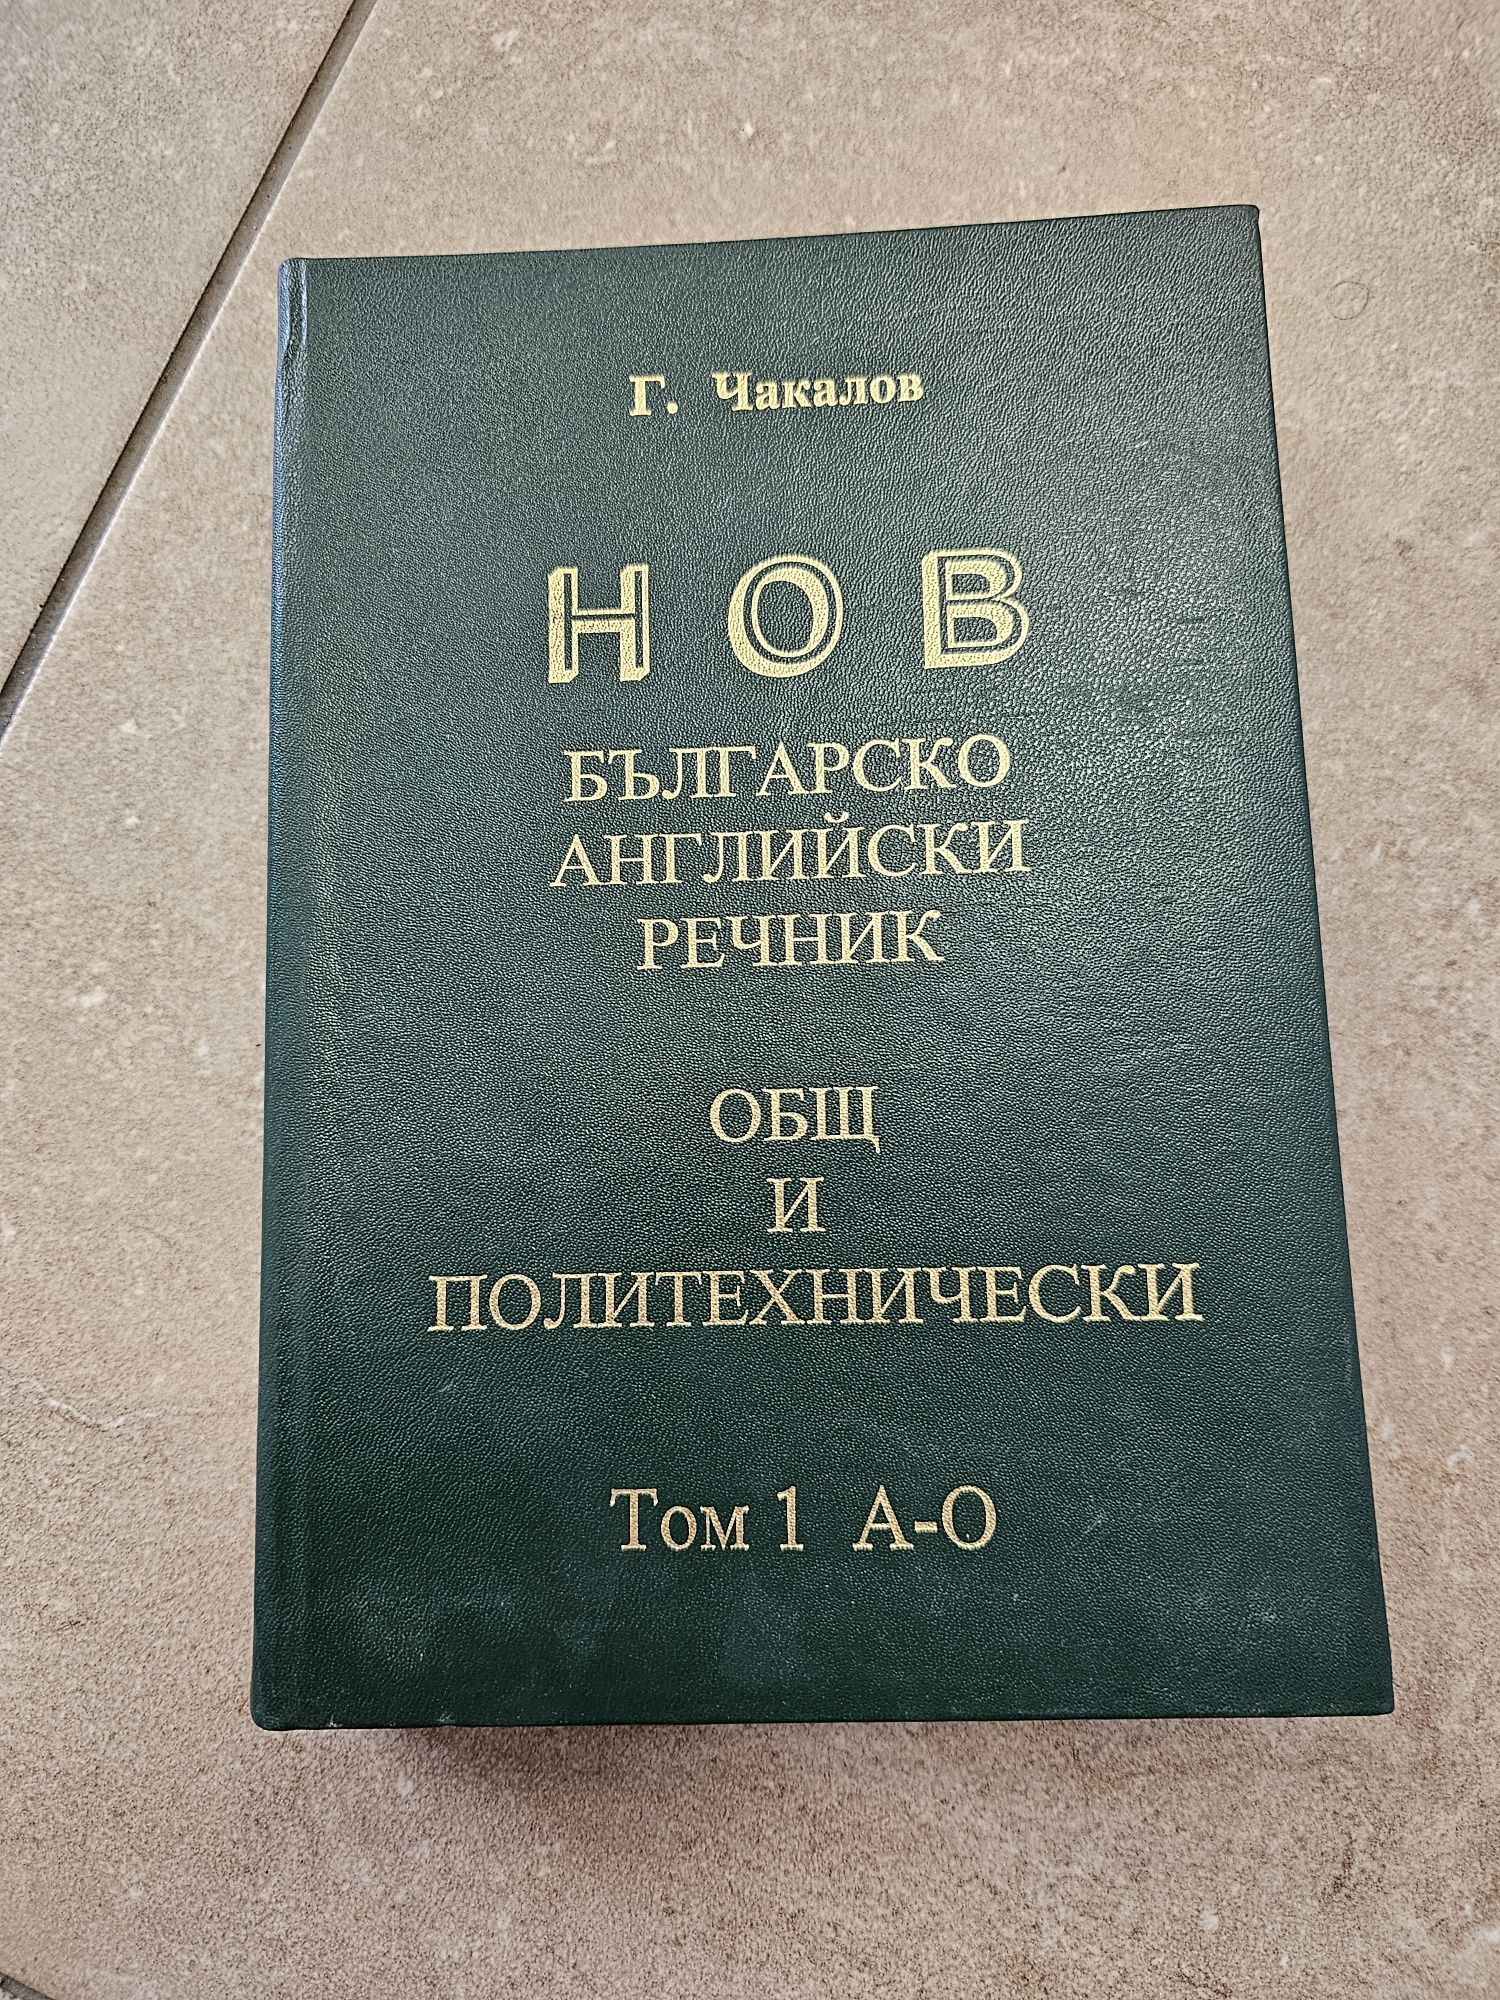 Българско Английски Речник